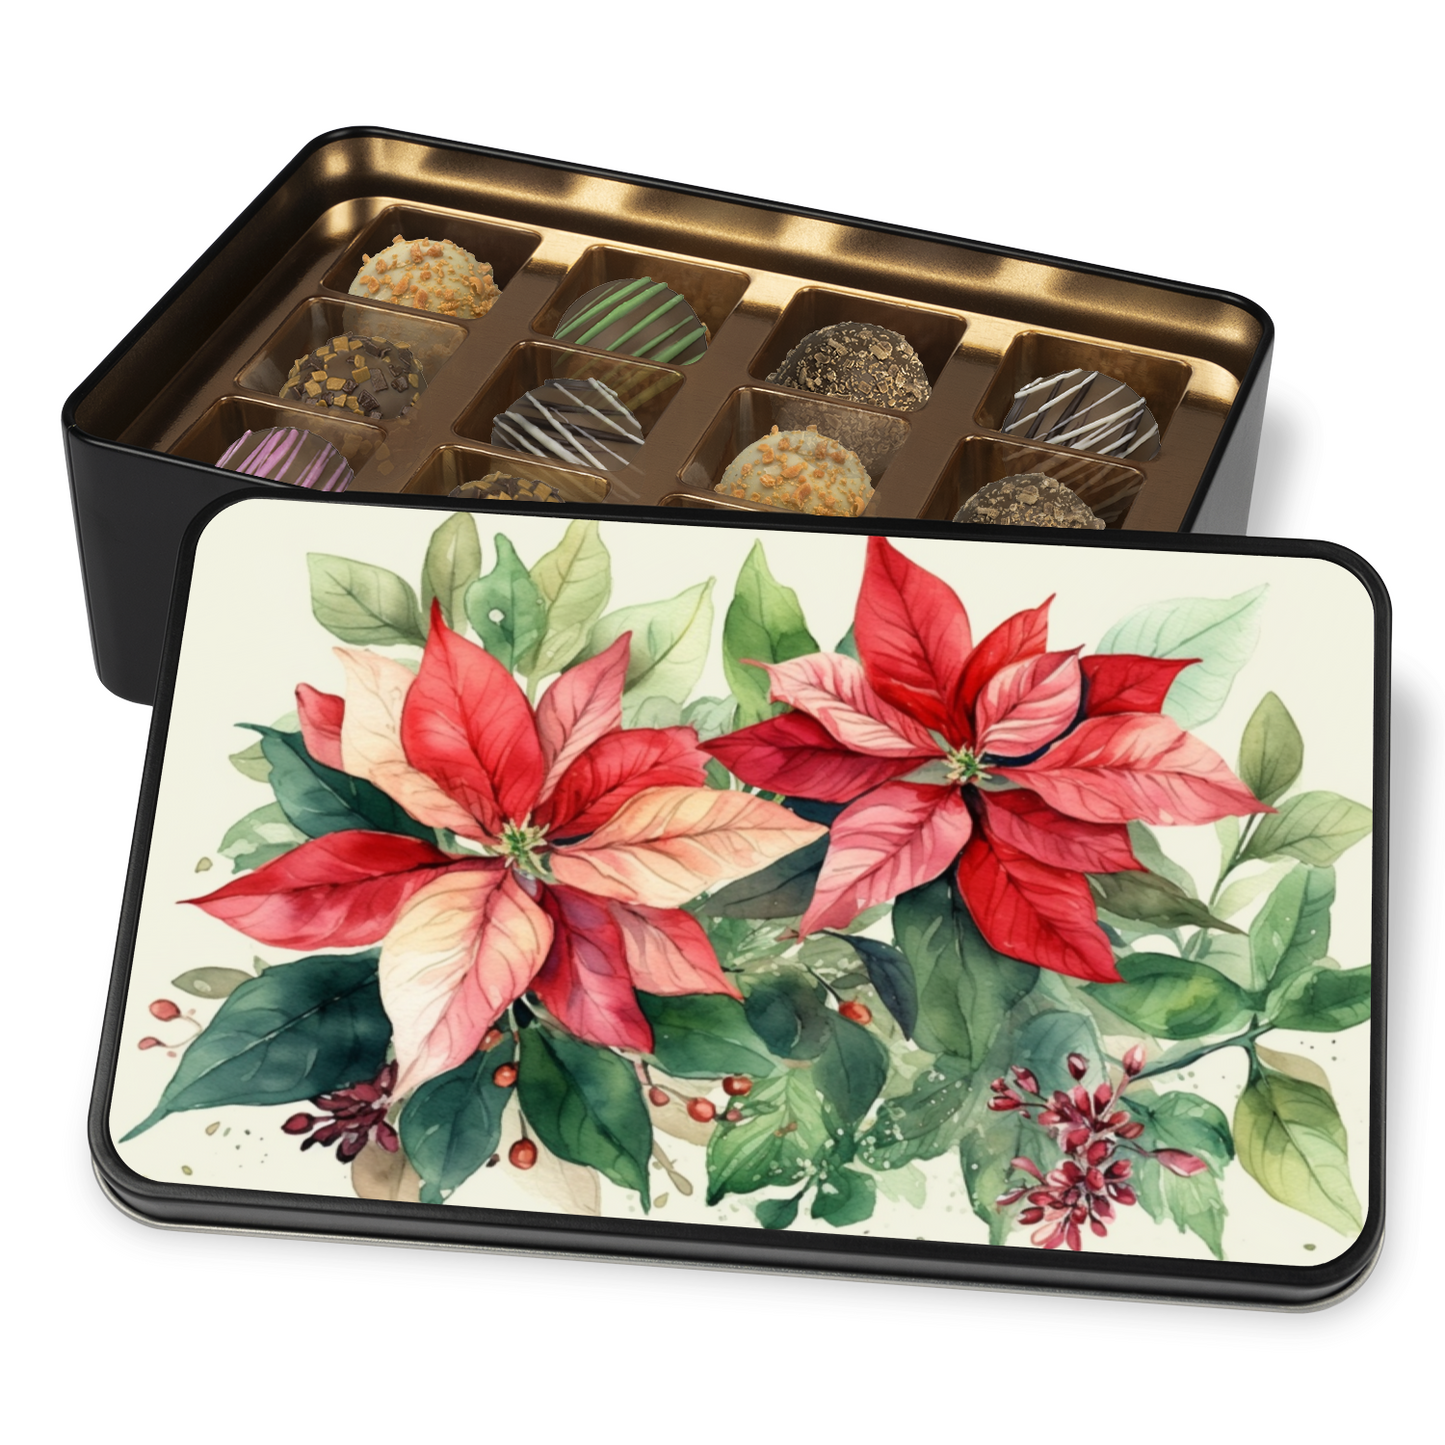 Artistic Poinsettia Chocolate Truffles: Indulgence in a Stunning Tin - Mardonyx Candy